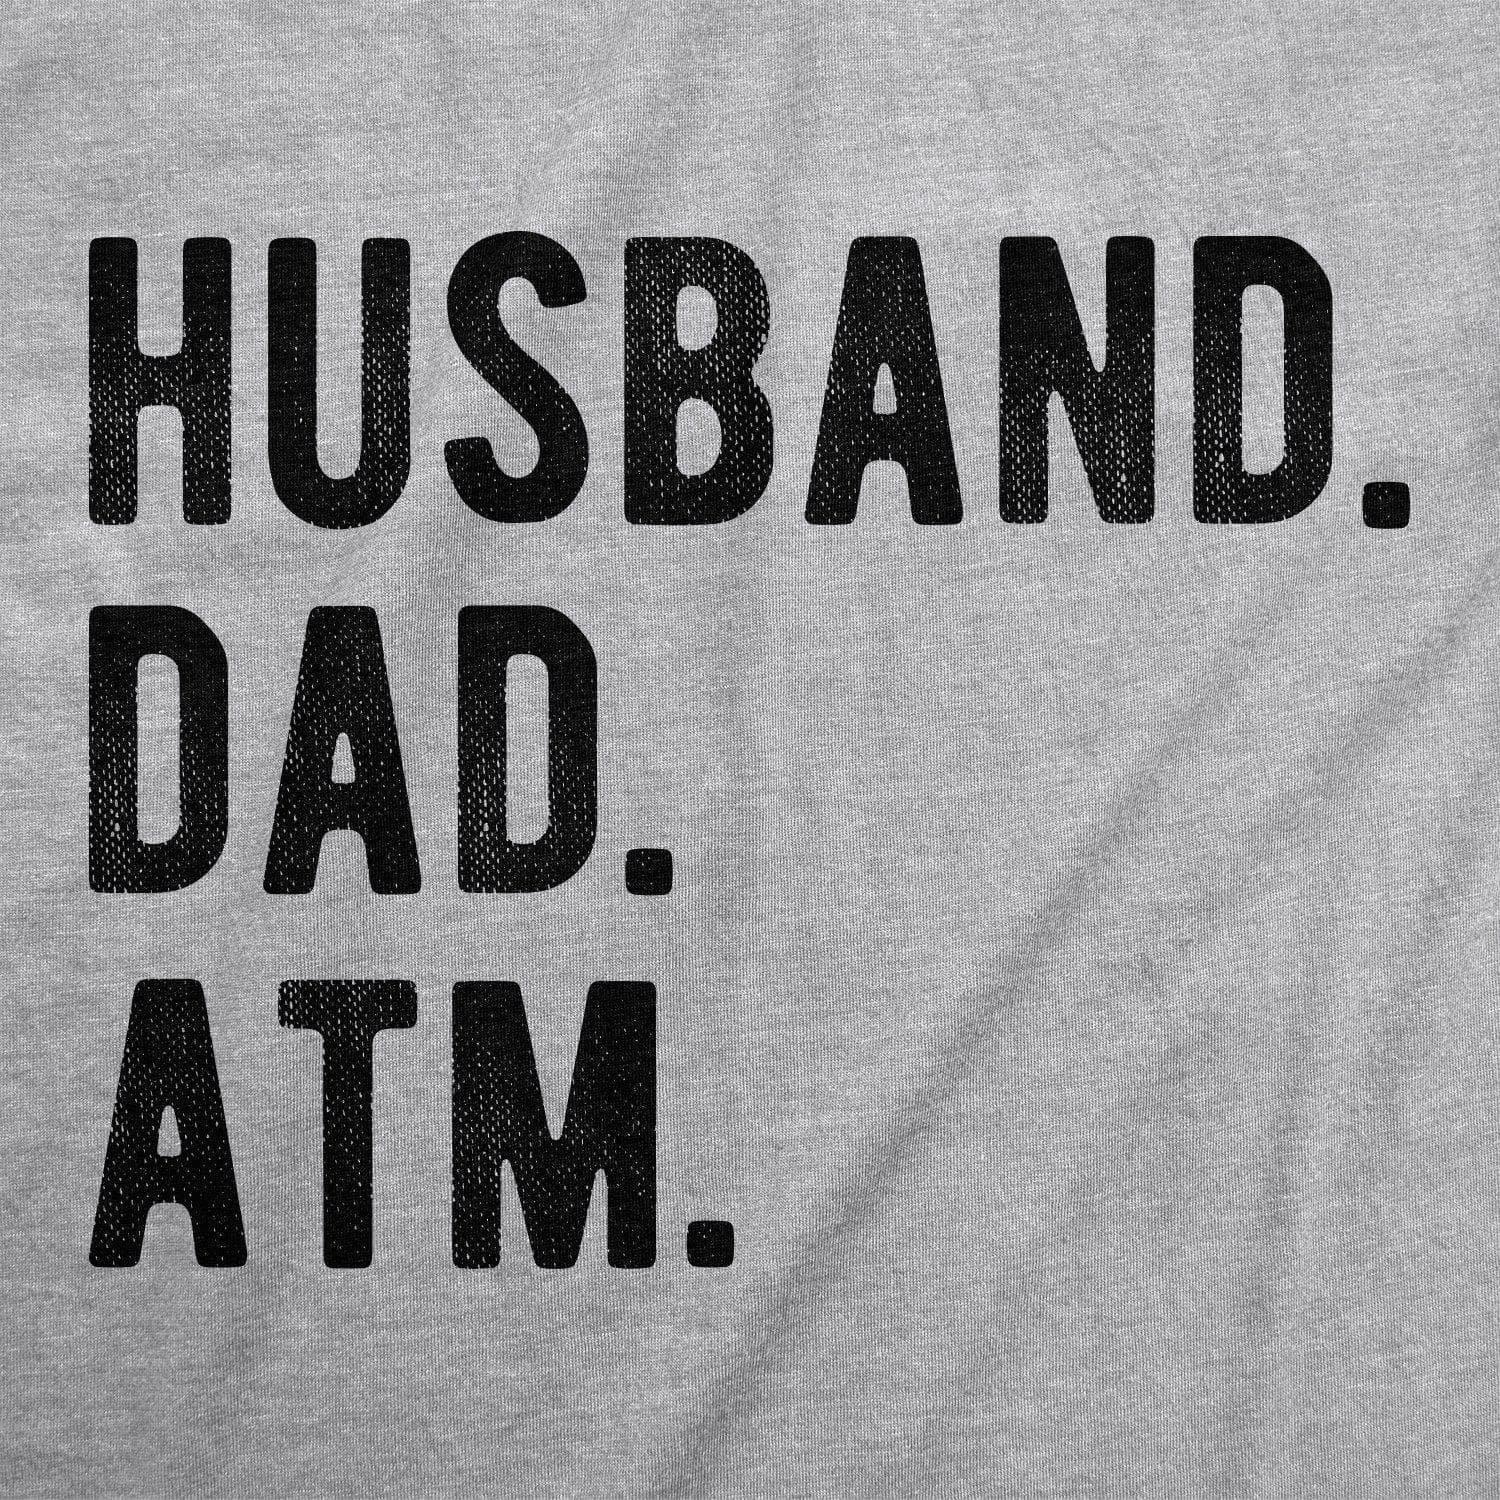 Husband. Dad. ATM. Men's Tshirt - Crazy Dog T-Shirts